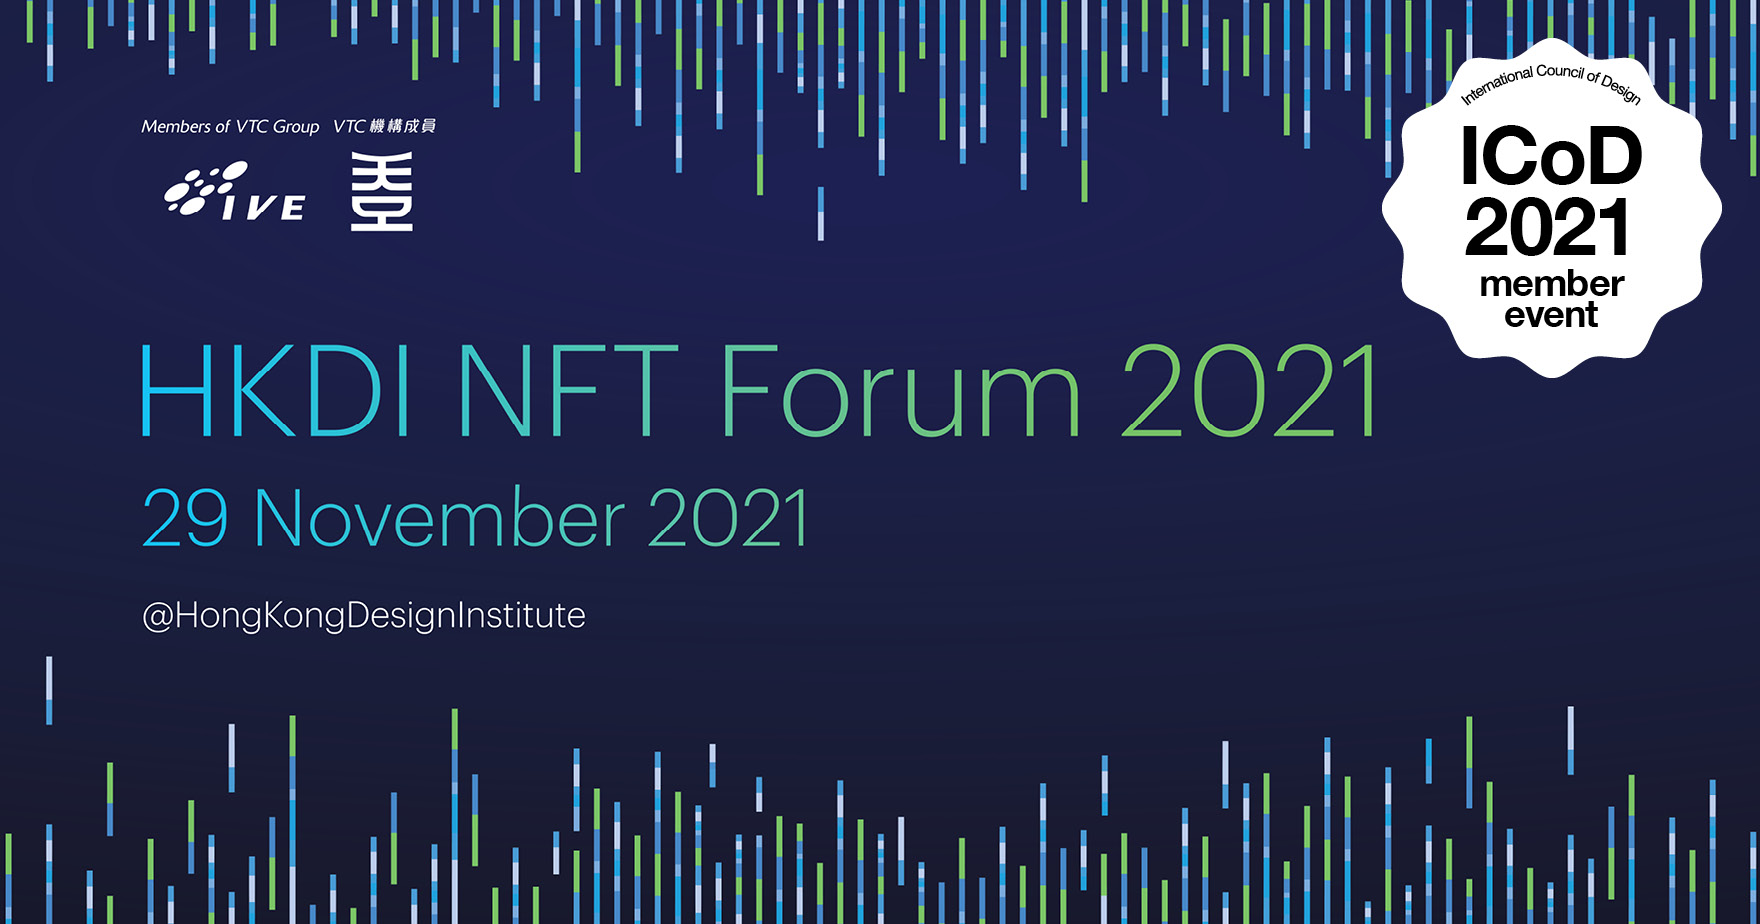 HKDI NFT forum 2021